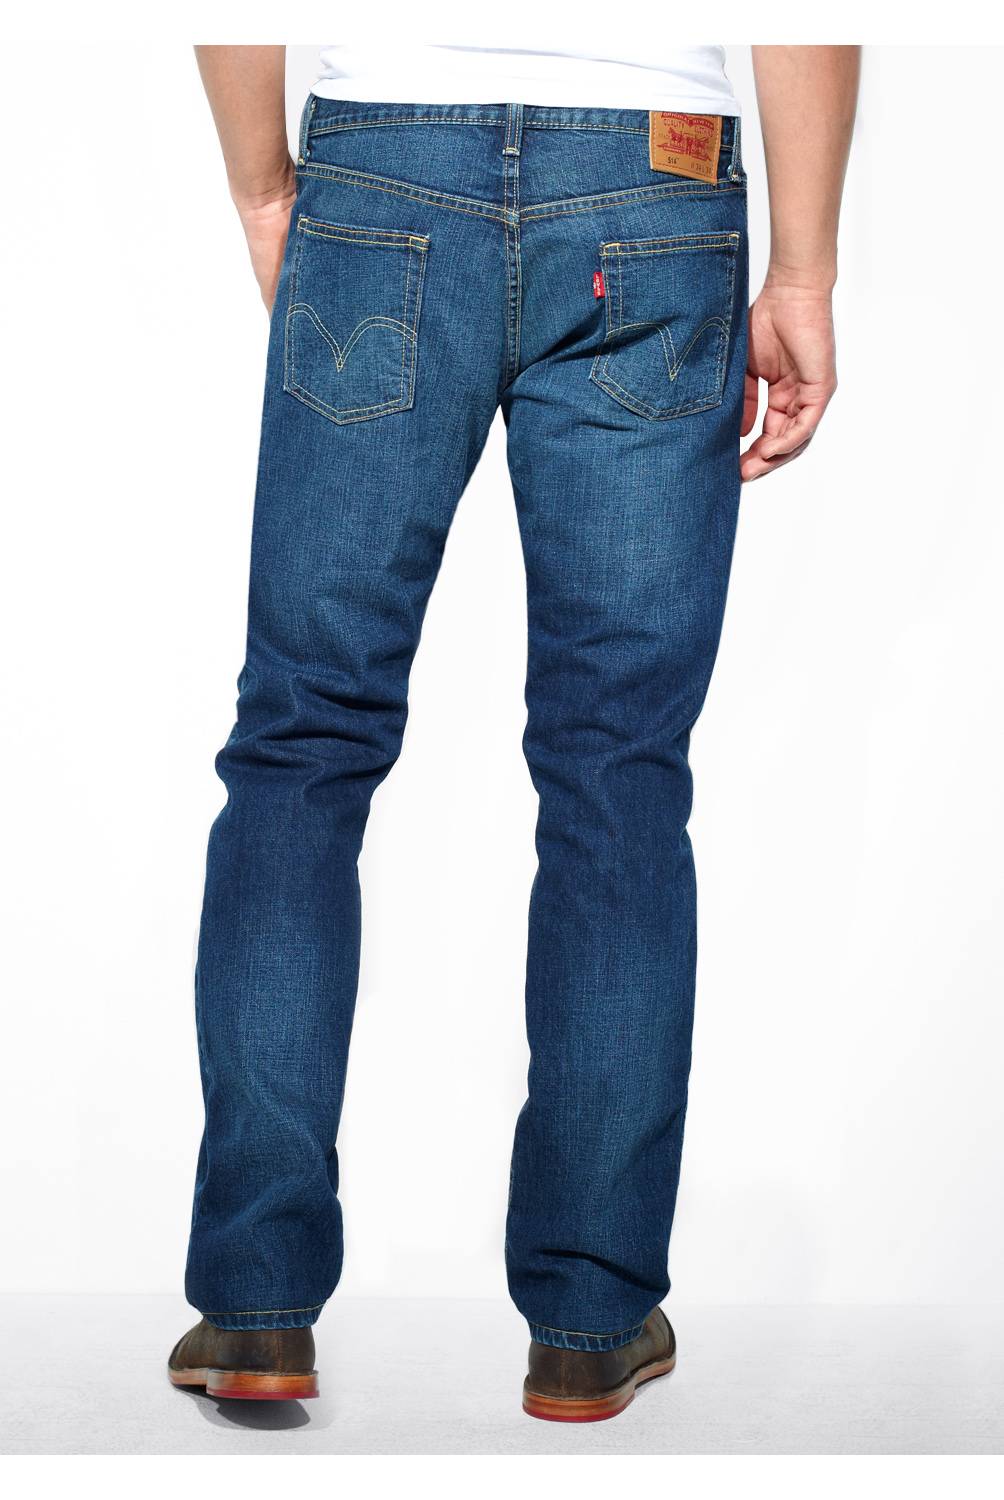 LEVIS - Jeans Regular 514 0239